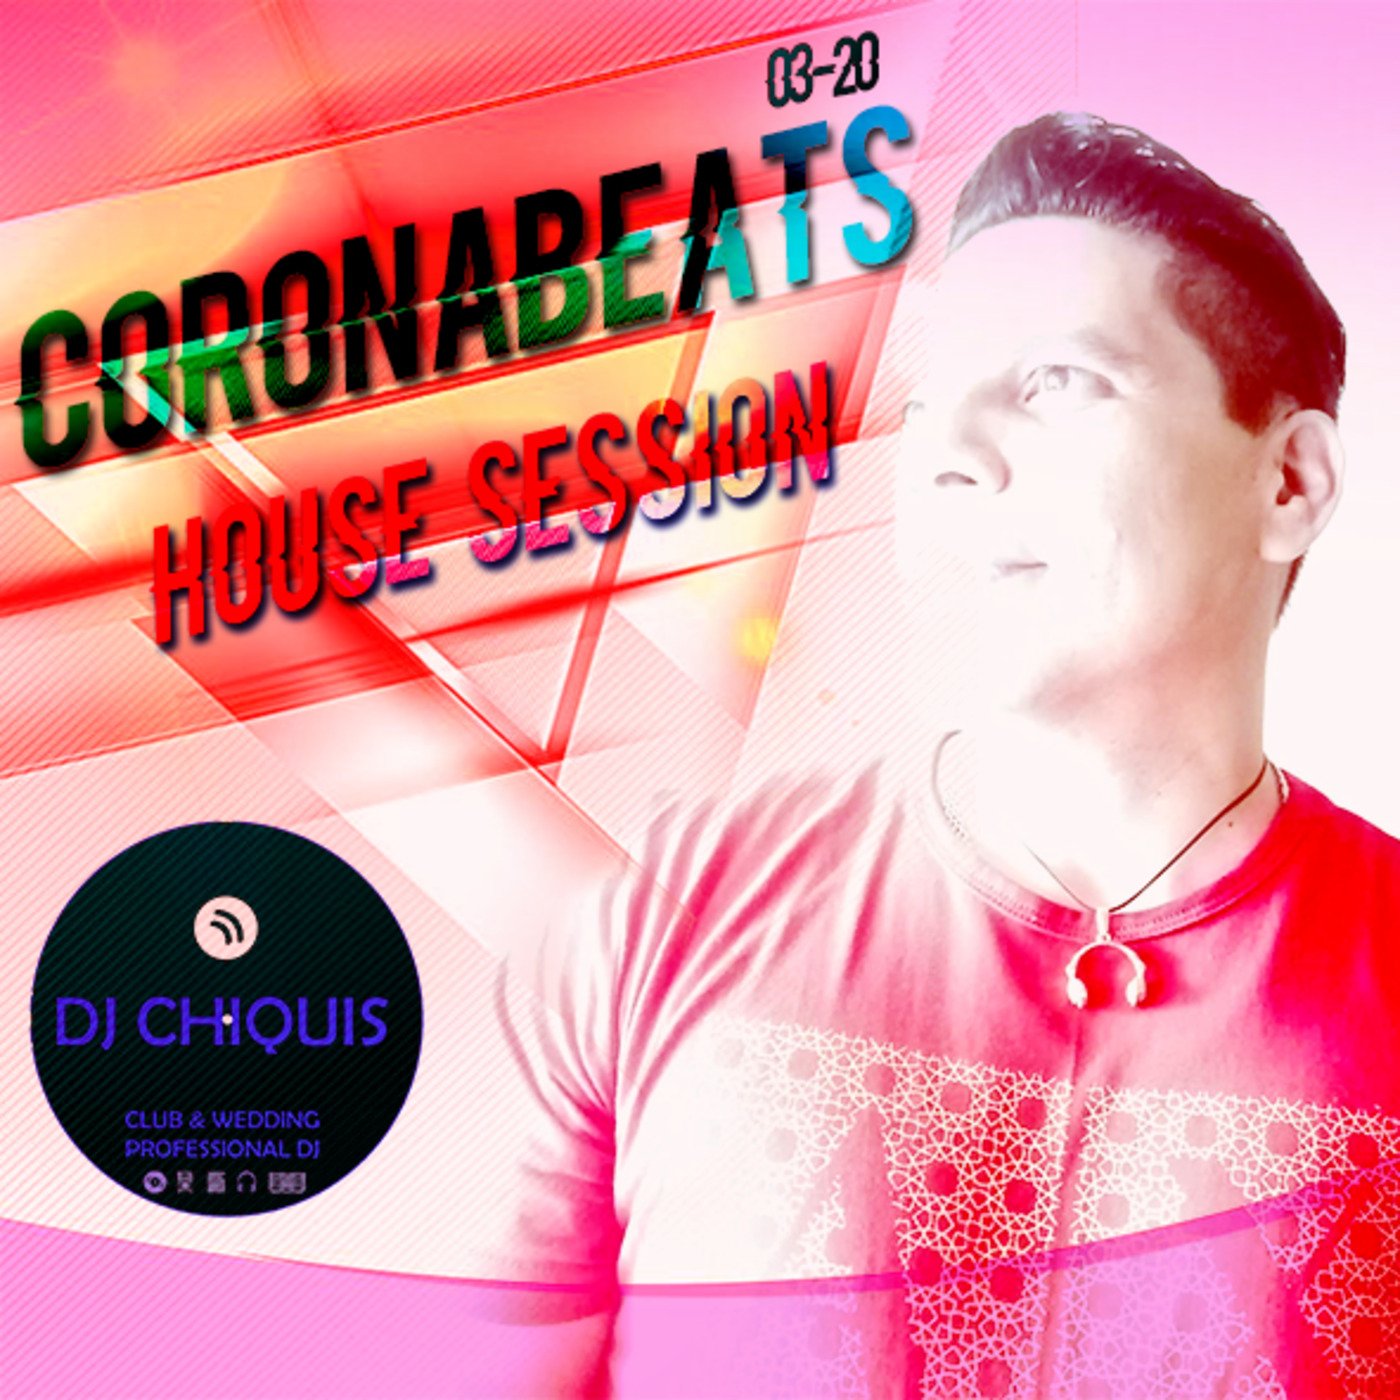 Coronabeats House Session -Dj CHiquis